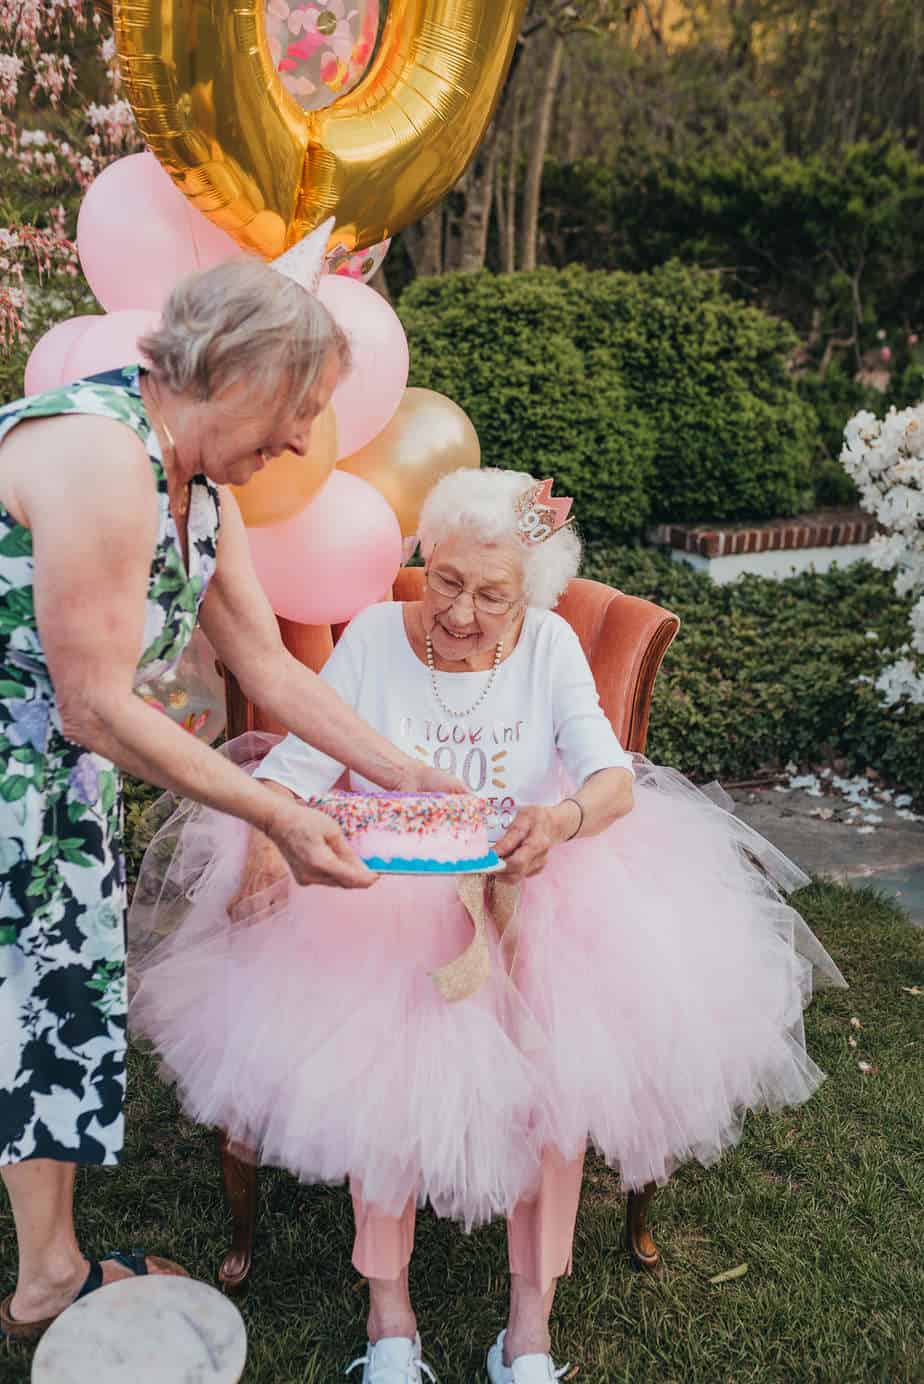 A grandma receiving her birthday cake